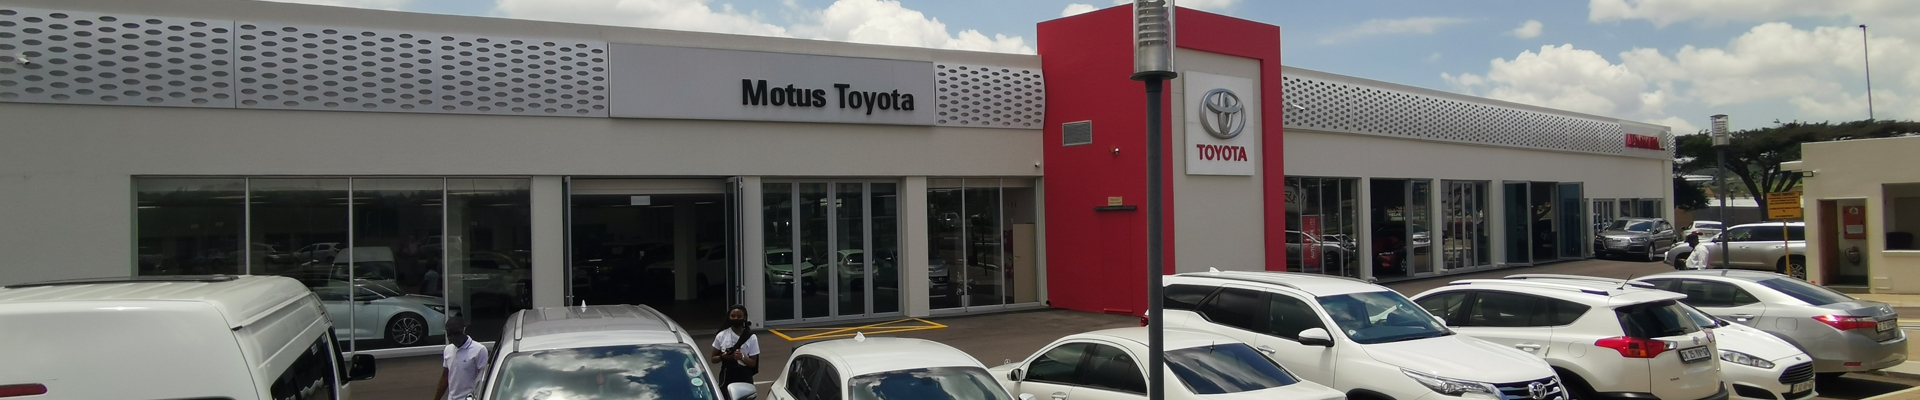 Motus Toyota Bedfordview dealer image2